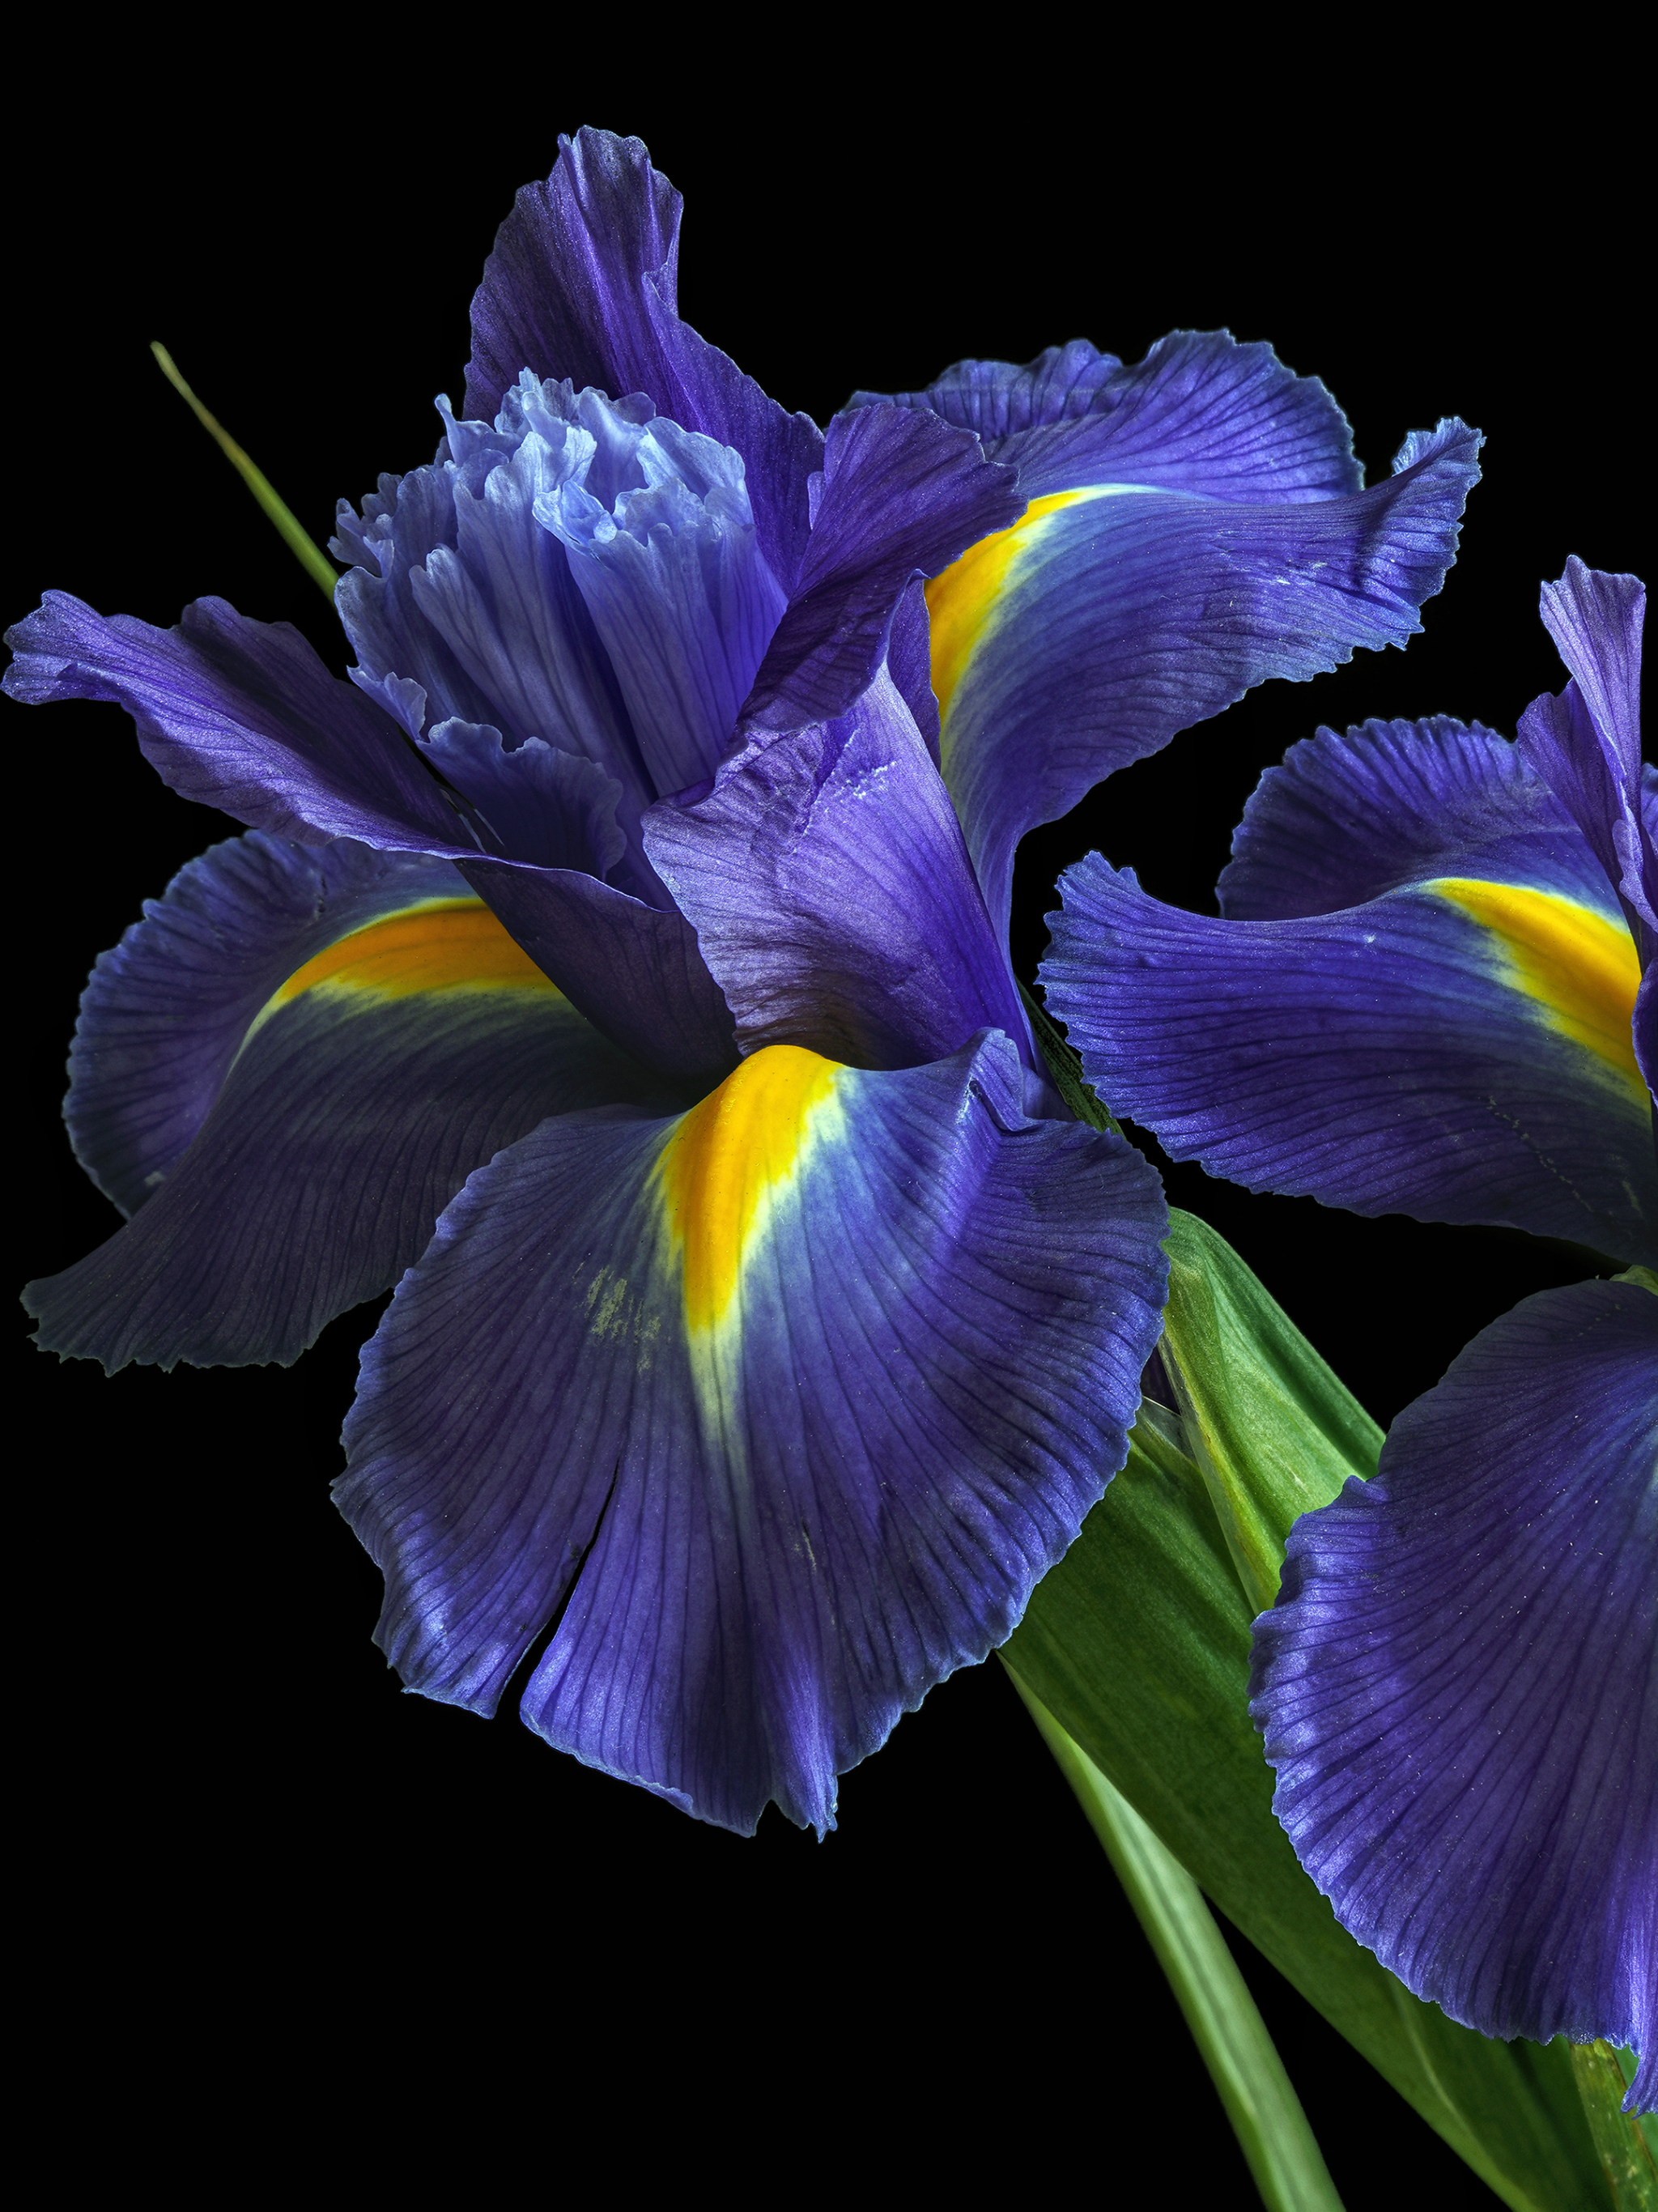 Iris flower 1080P 2K 4K 5K HD wallpapers free download  Wallpaper Flare